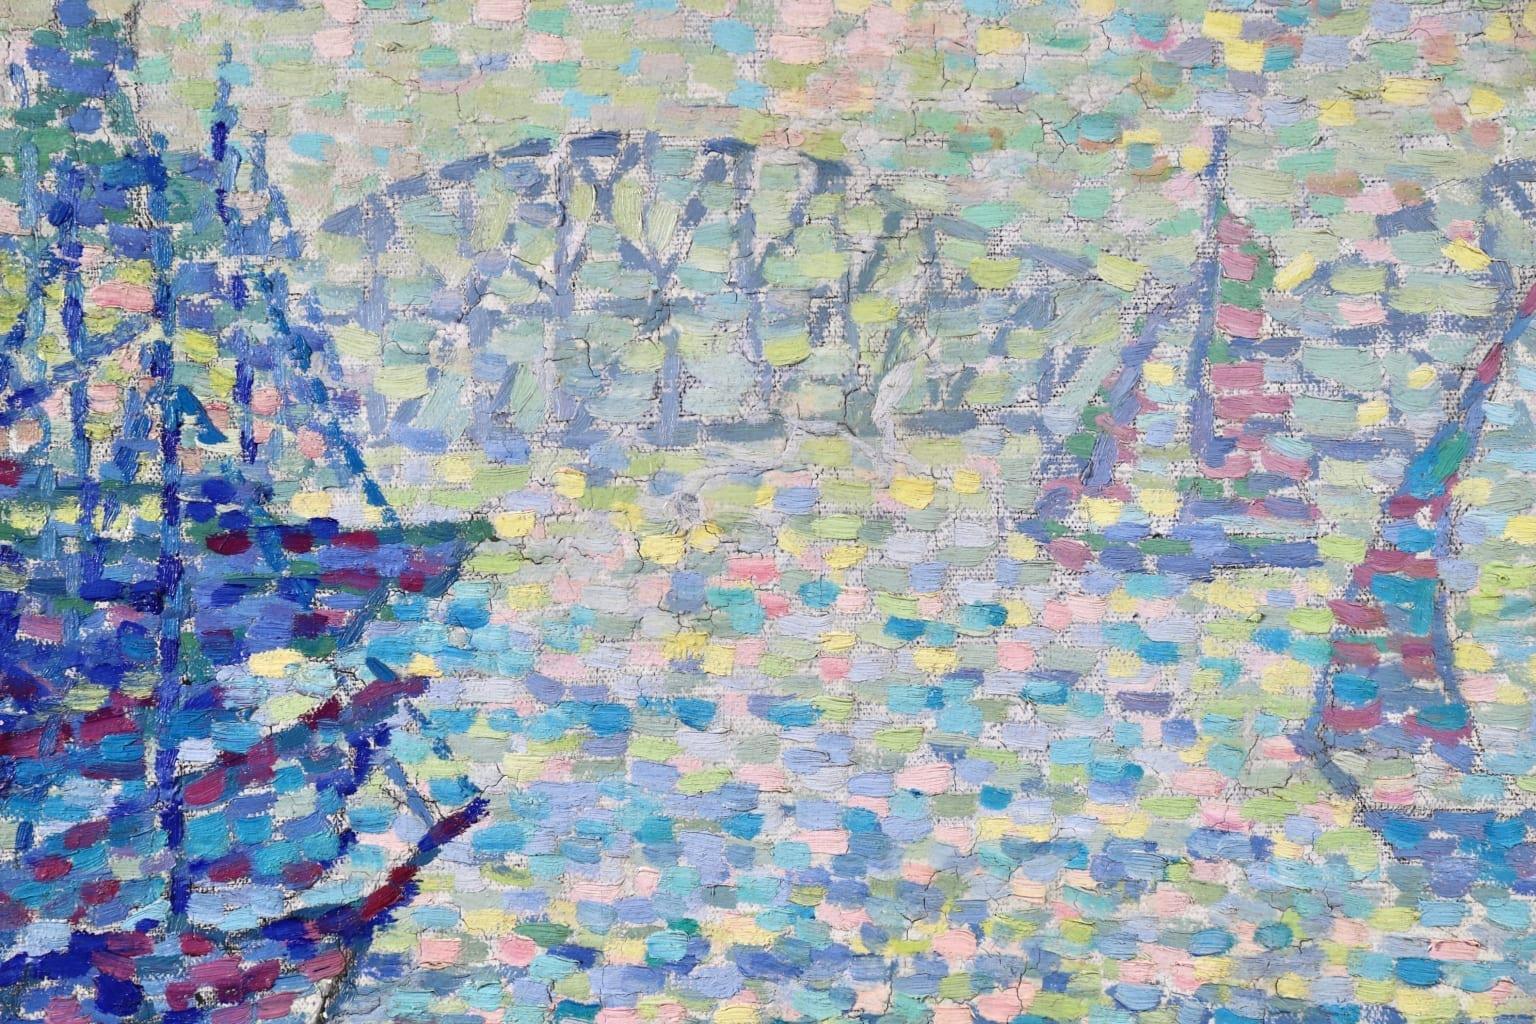 Sailing Boats - Neo Impressionist Oil, Riverscape - Jeanne Selmersheim-Desgrange - Pointillist Painting by JEANNE SELMERSHEIN-DESGRANGE